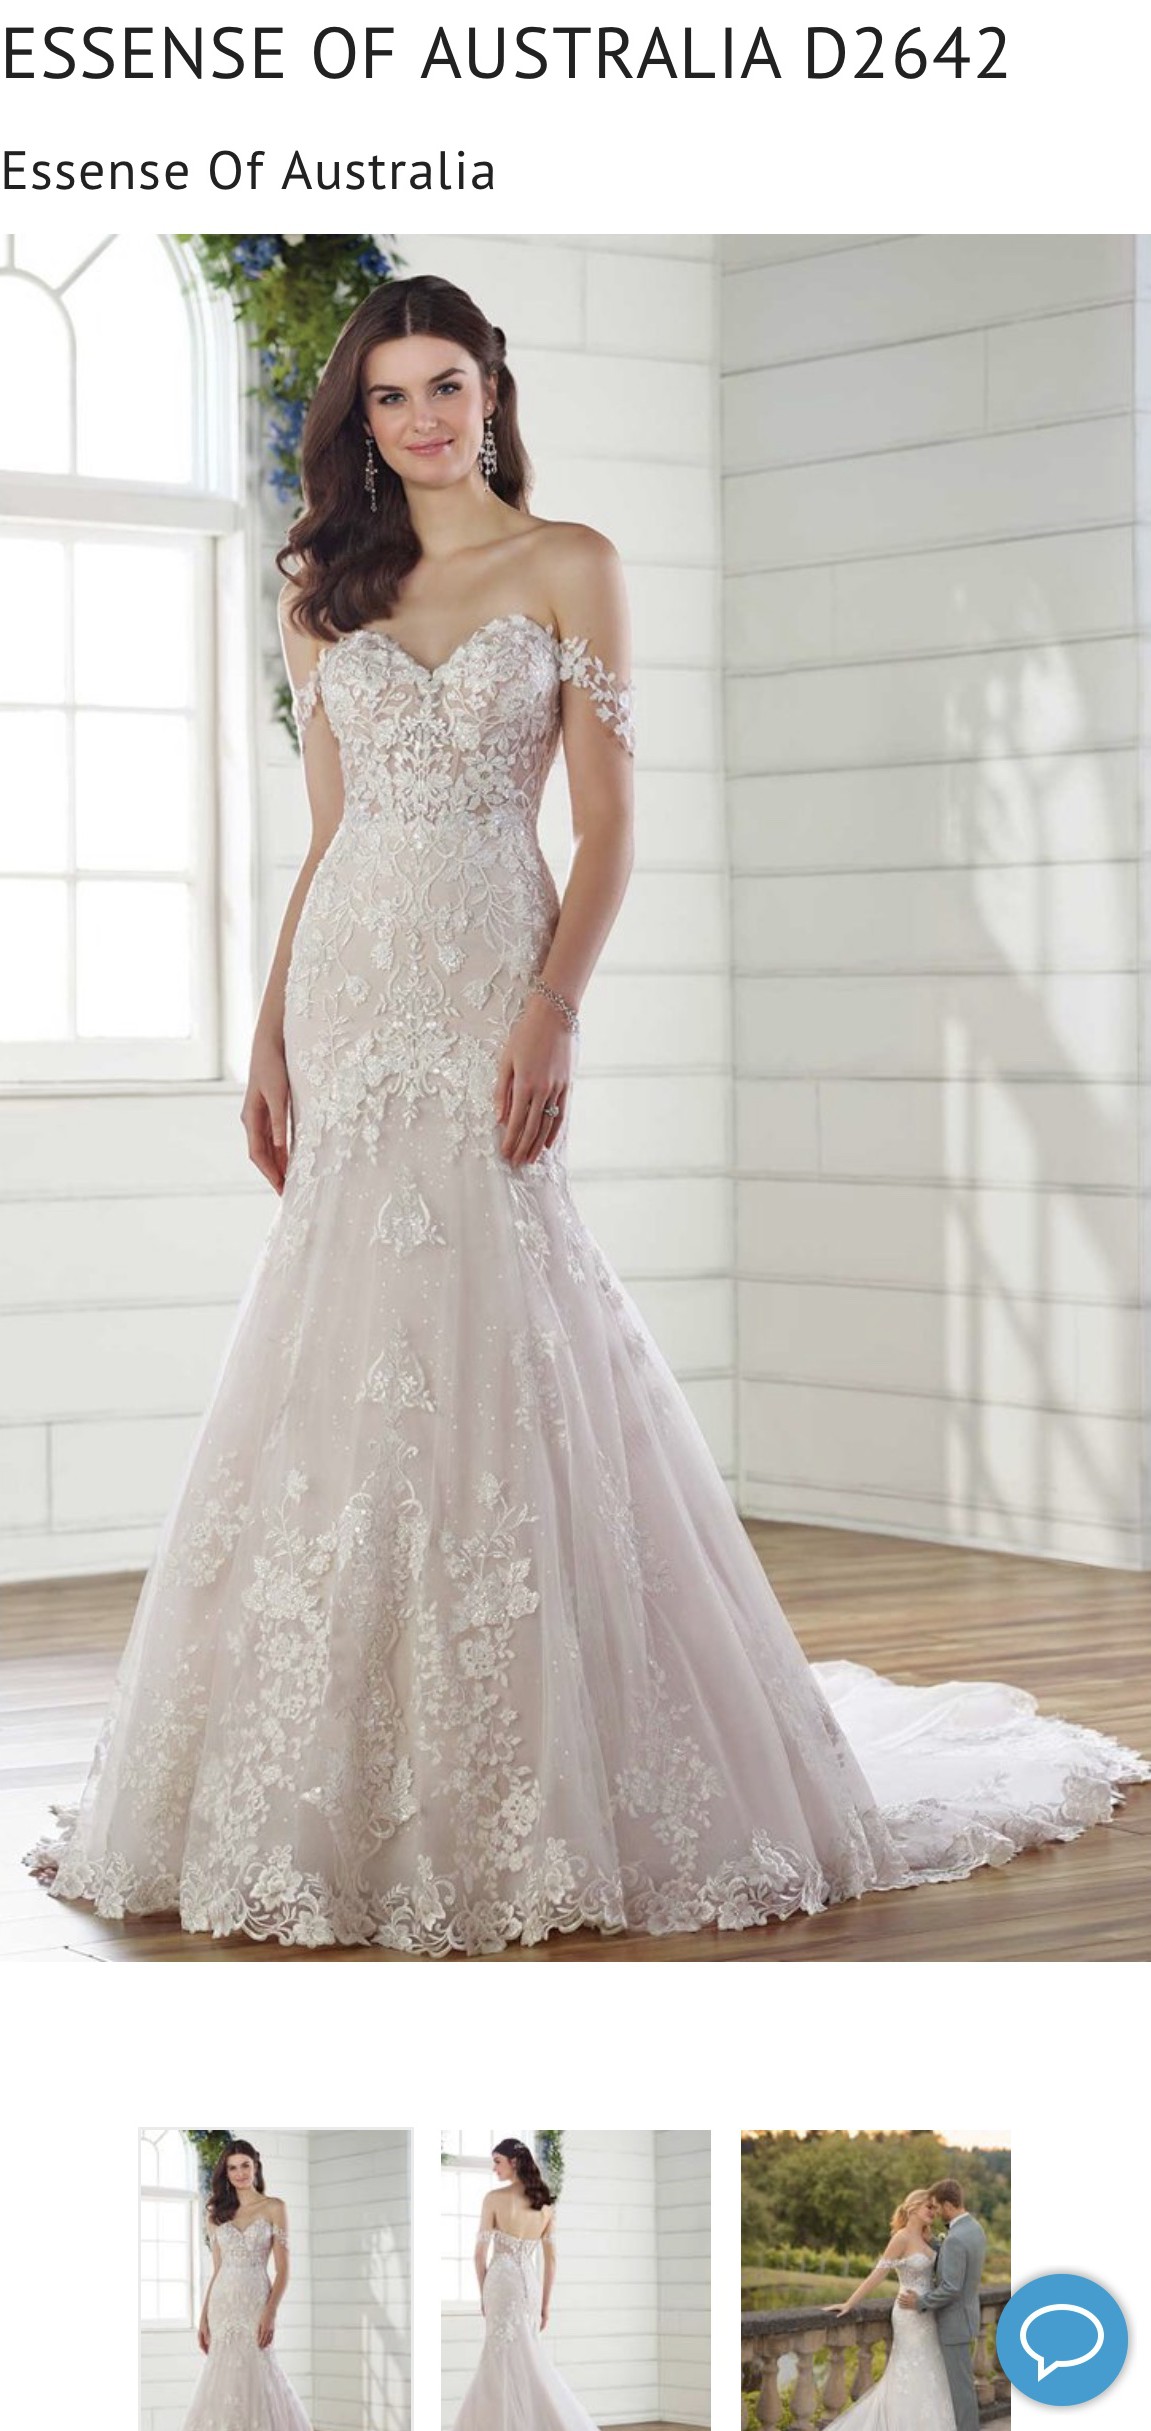 Essense of Australia D2642 Wedding Dress On Sale - 38% Off